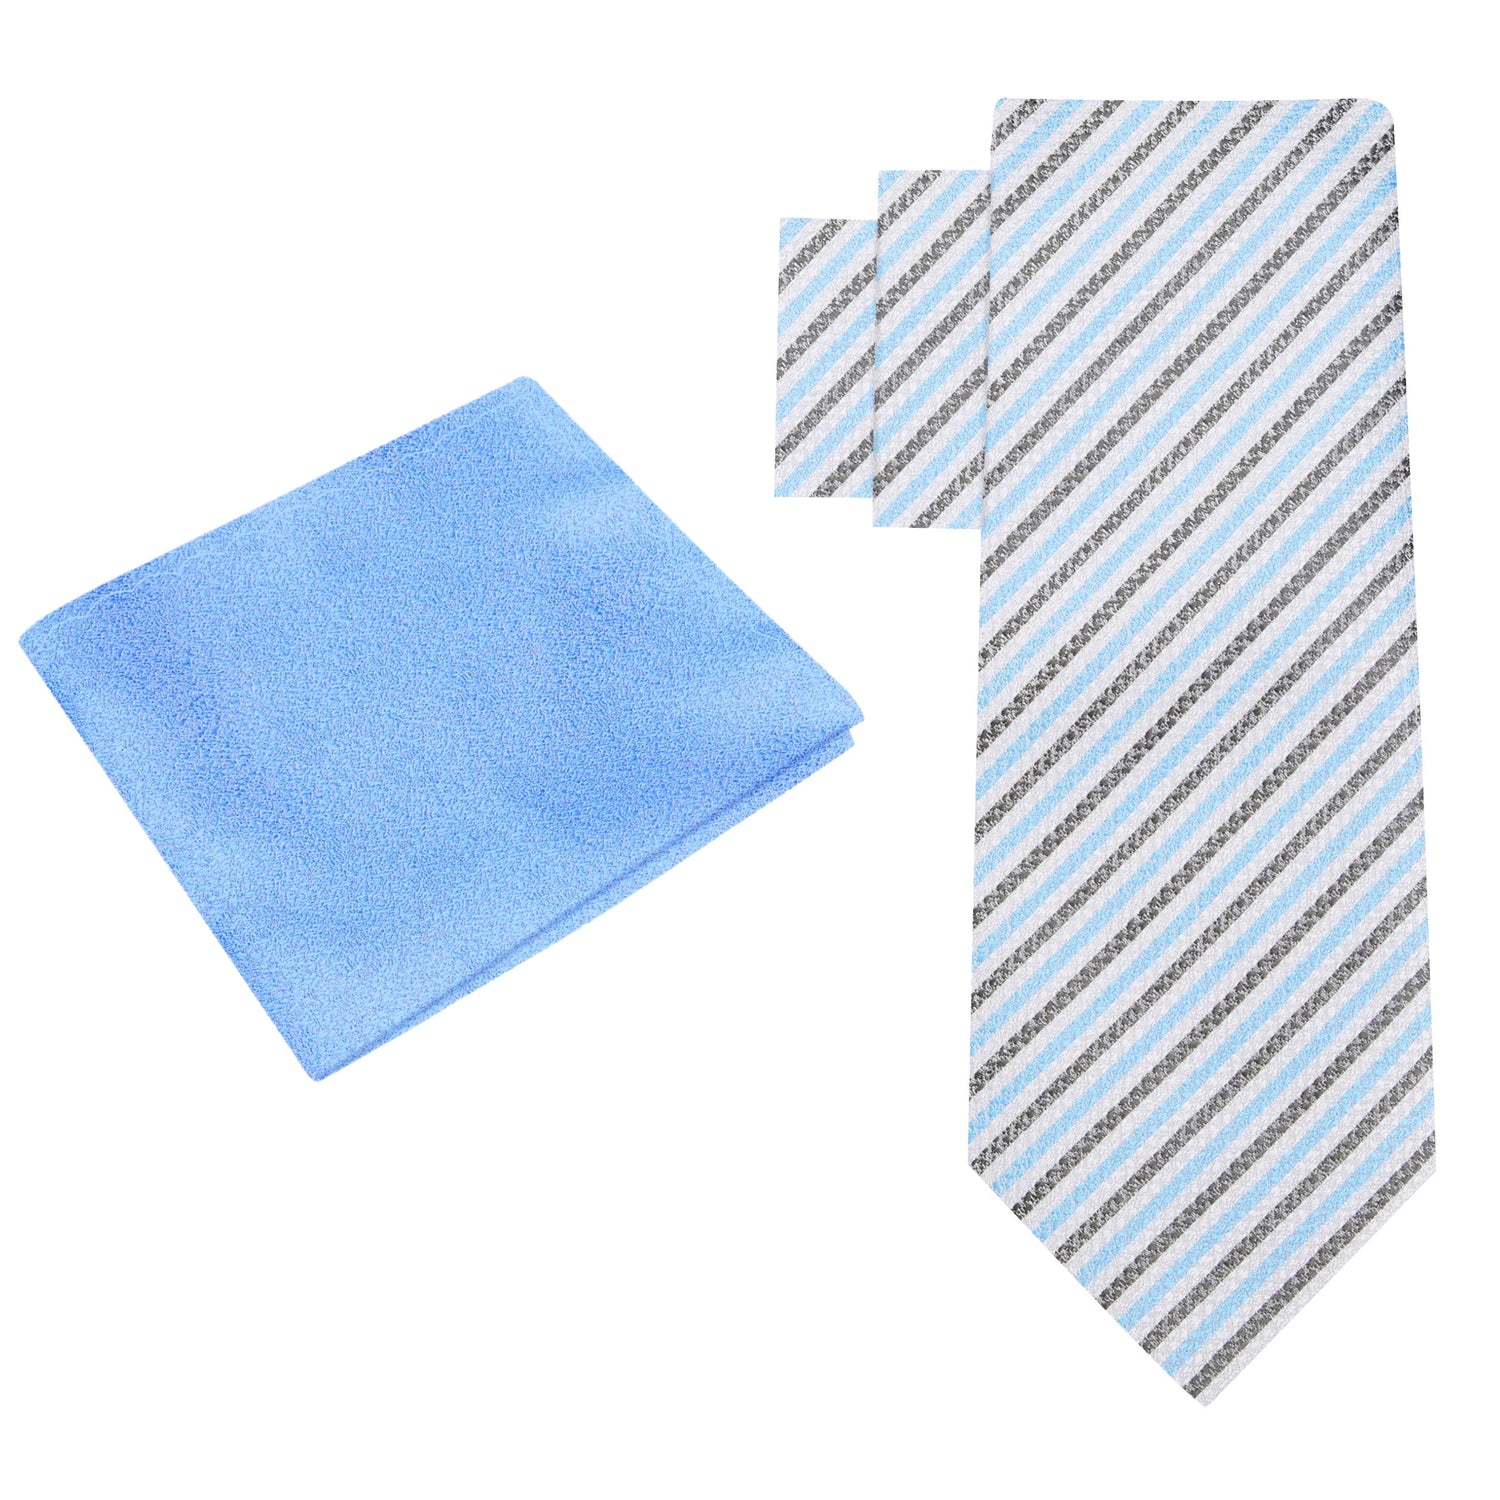 Alt View: White, Blue Stripe Necktie and Blue Square